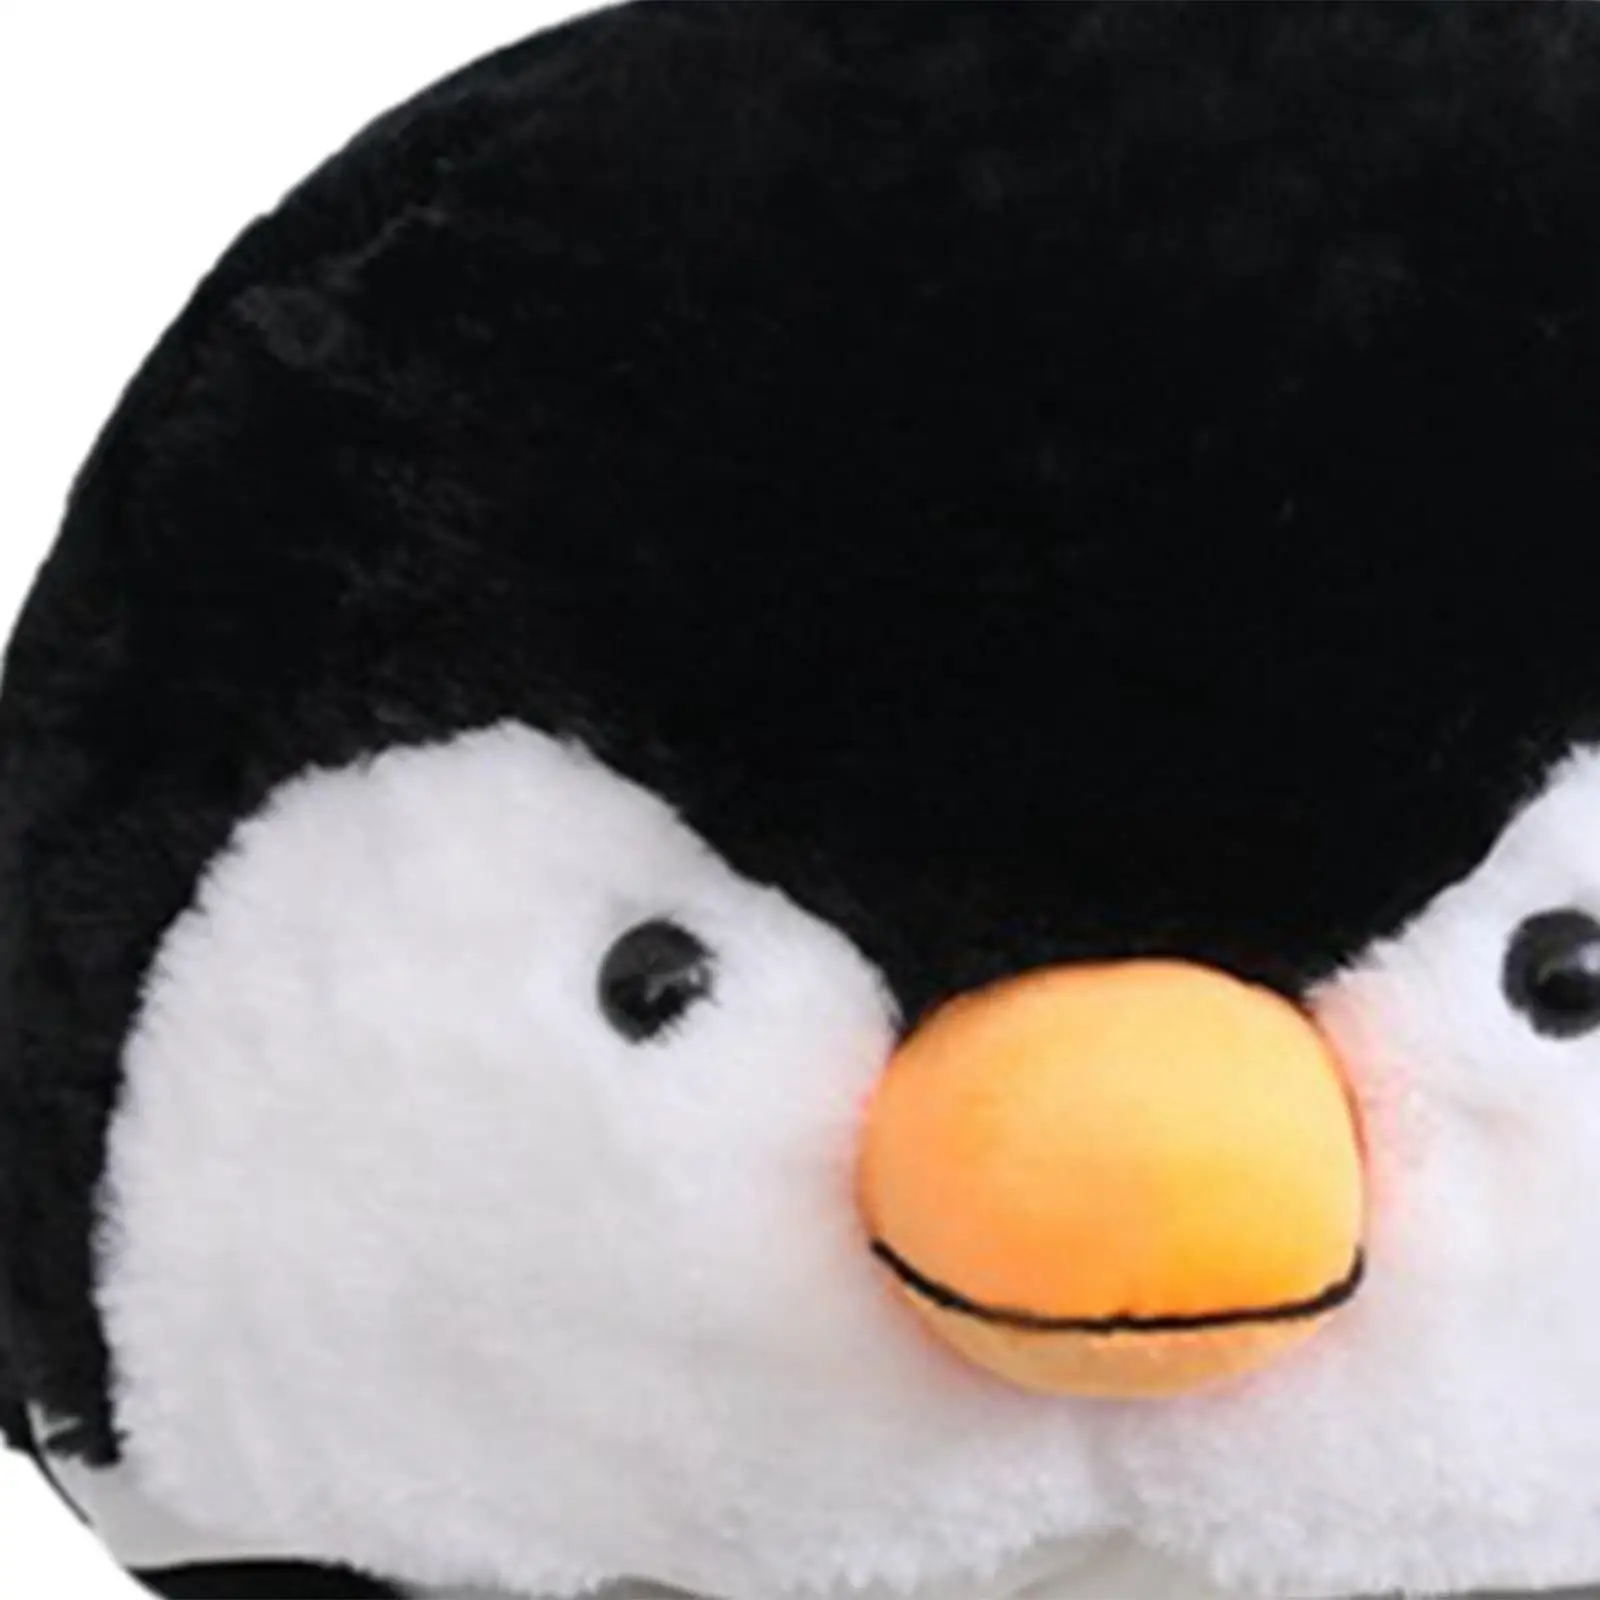 Fashion Penguin Plush Hat Ski Hat Funny Hats Warm for Holiday Children Girls